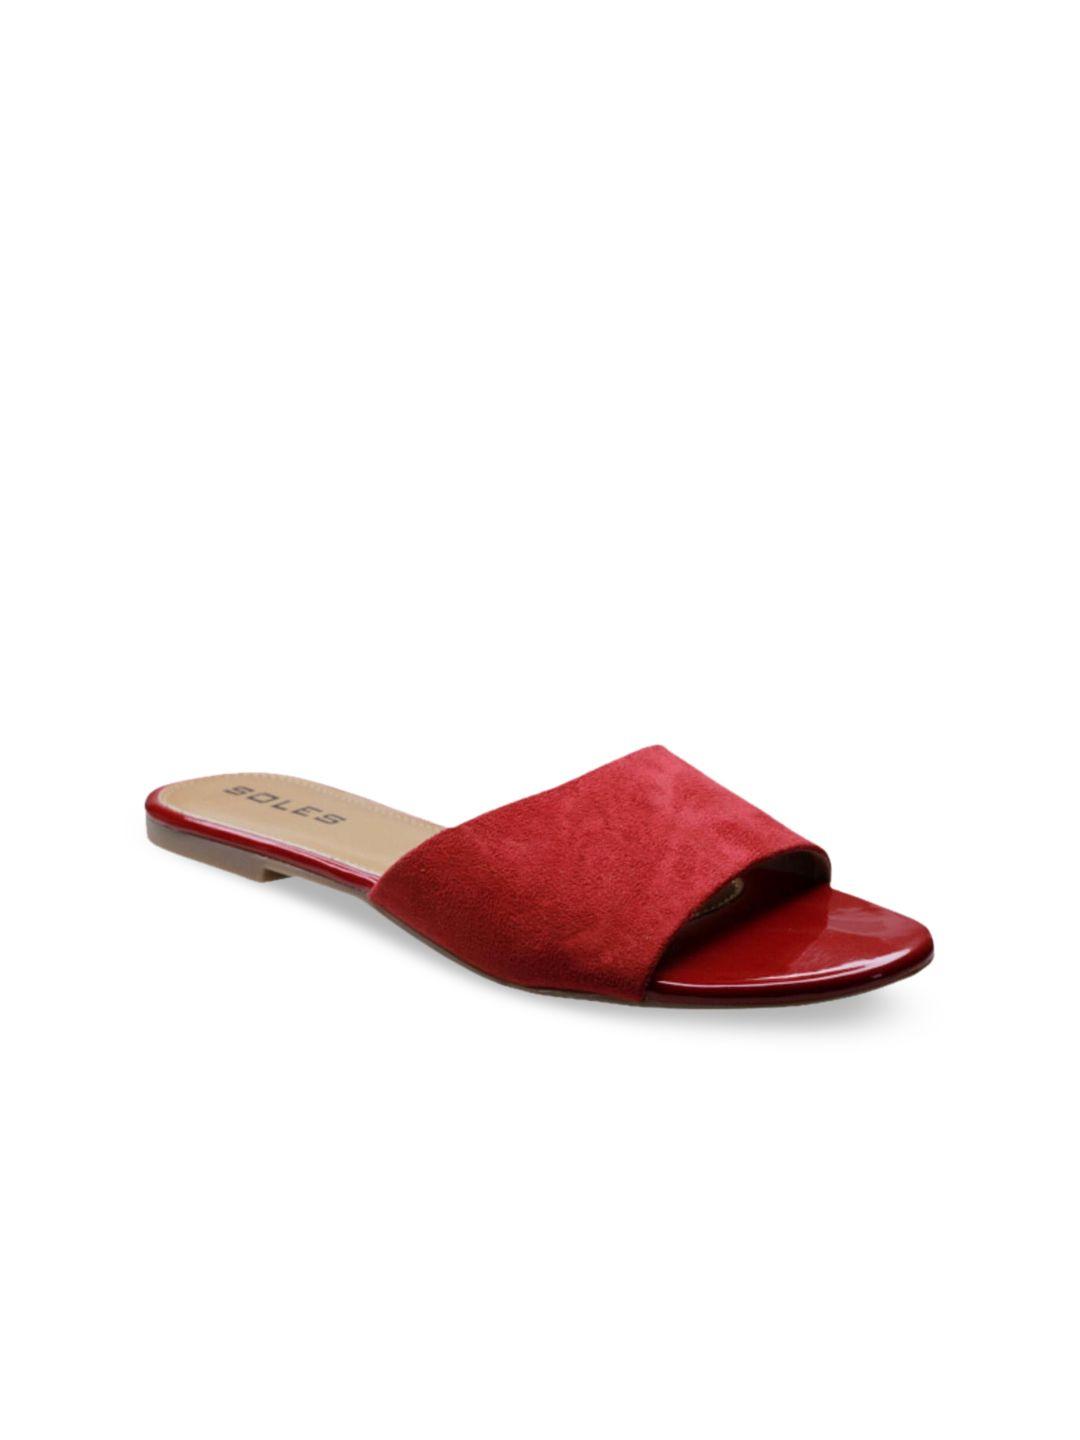 soles-women-red-open-toe-flats